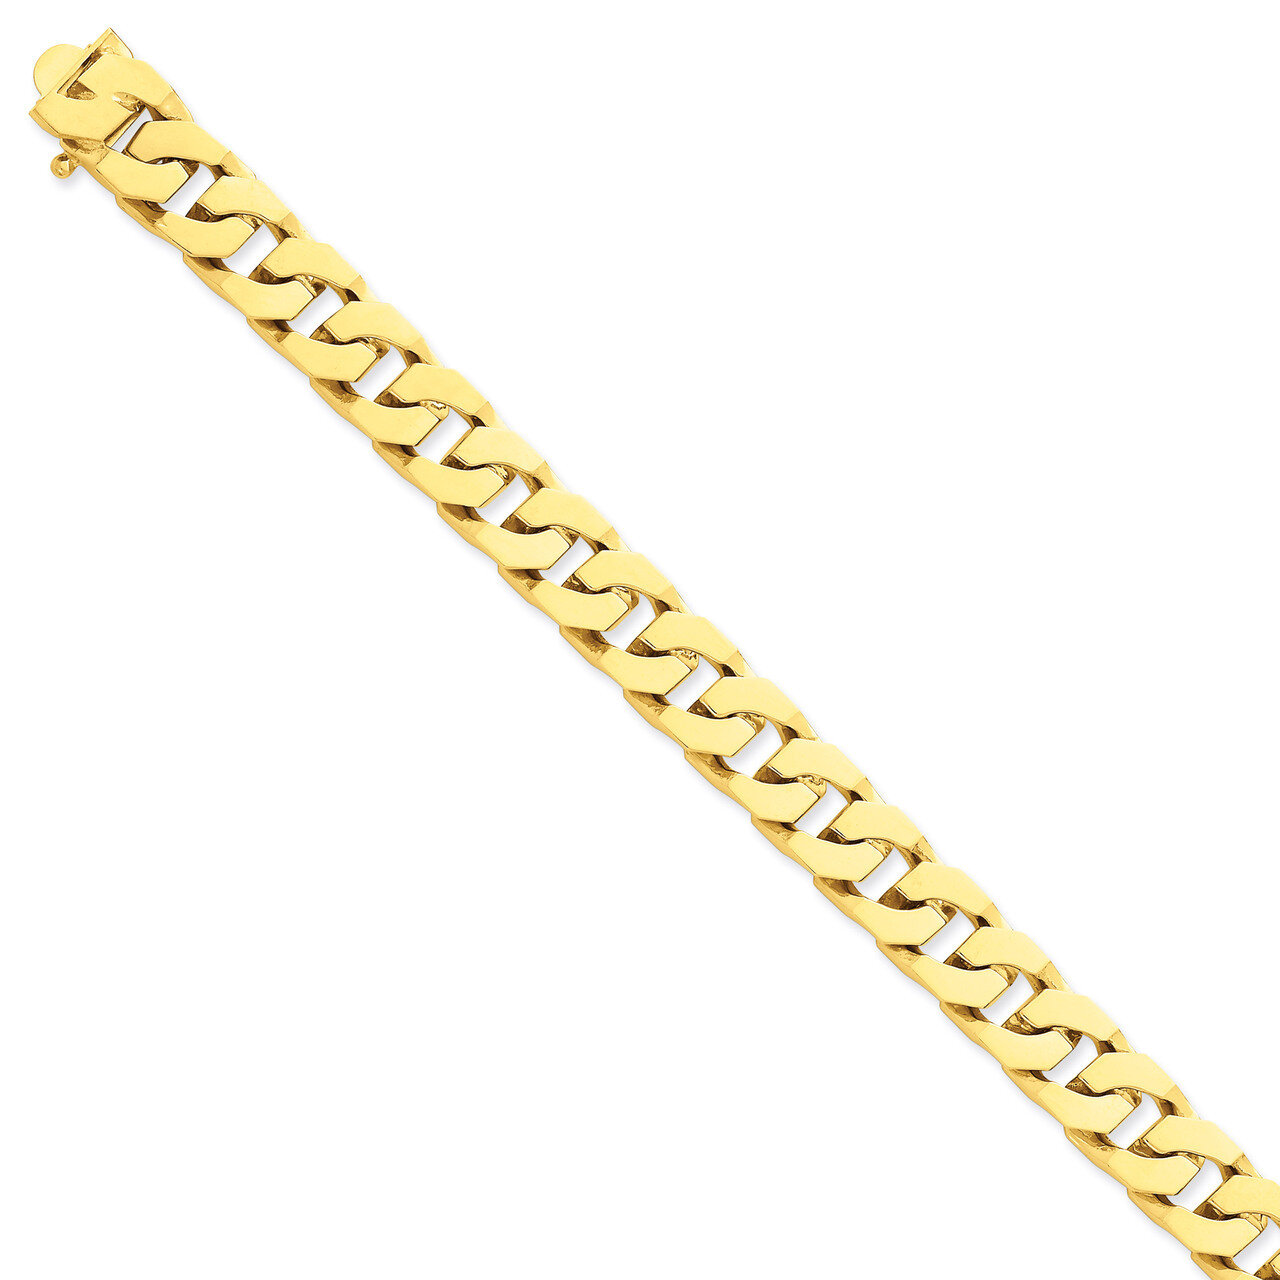 12mm Hand-Polished Fancy Link Chain 22 Inch 14k Gold LK139-22